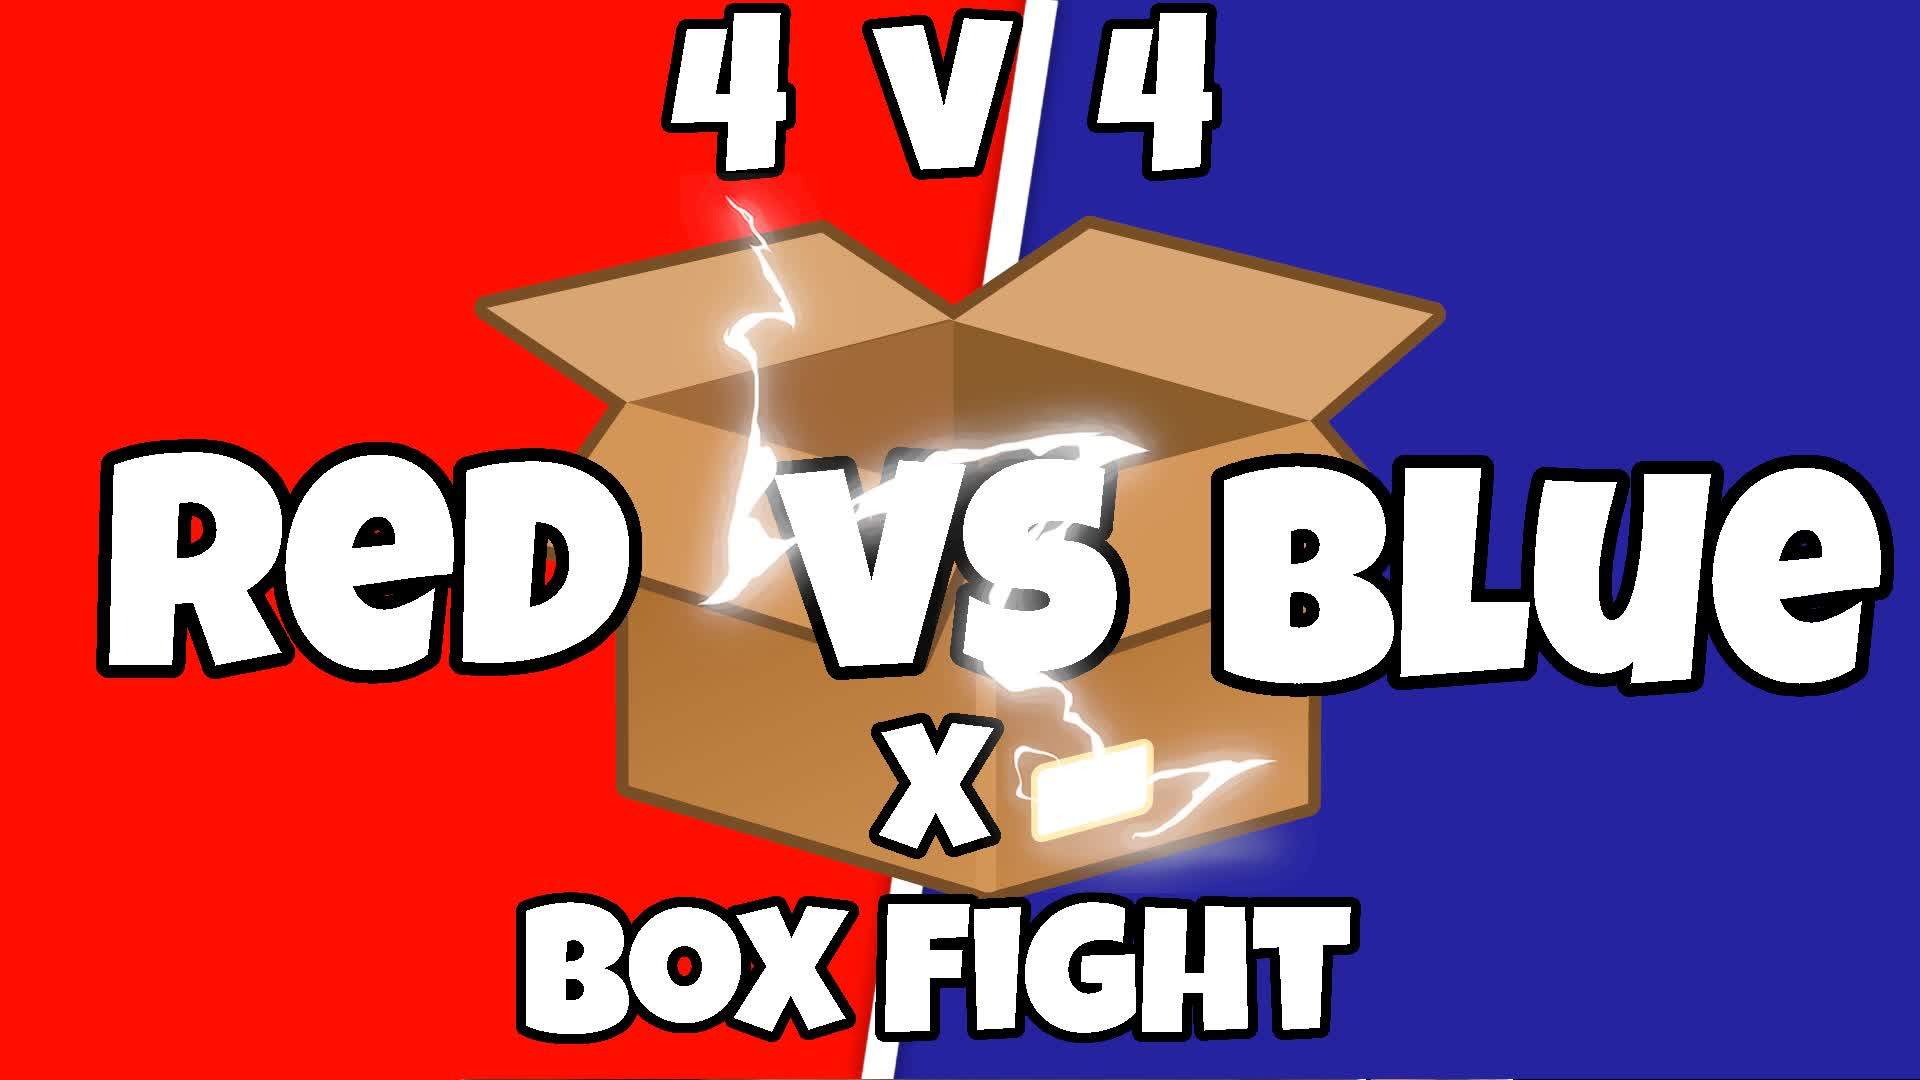 RED VS BLUE BOX FIGHT (4 v 4) 🔴🔵 📦